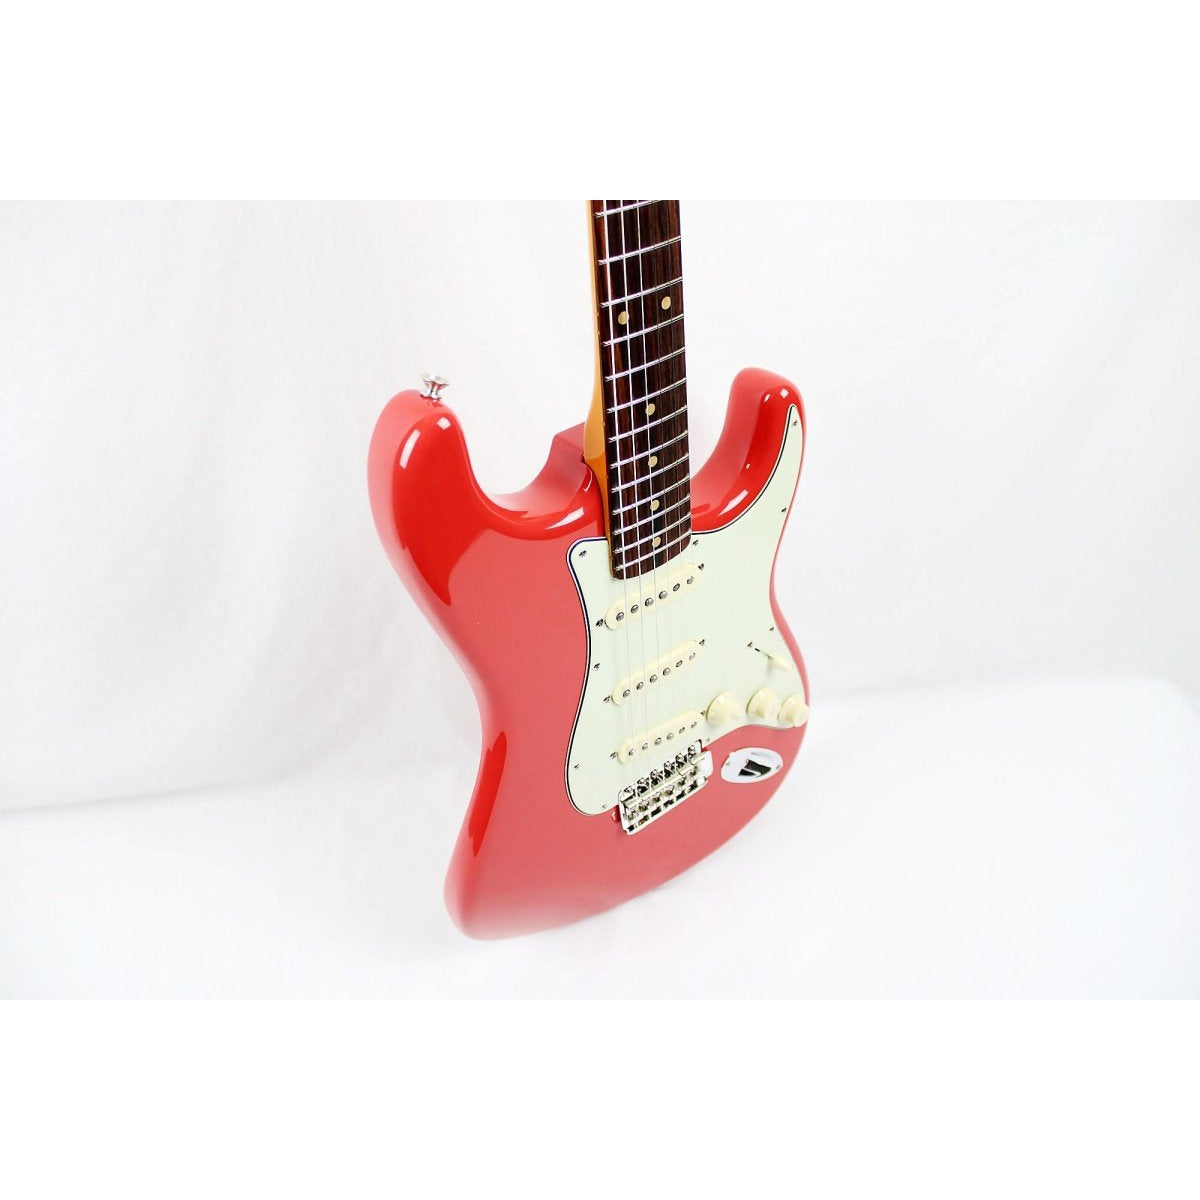 Fender American Vintage II 1961 Stratocaster - Fiesta Red